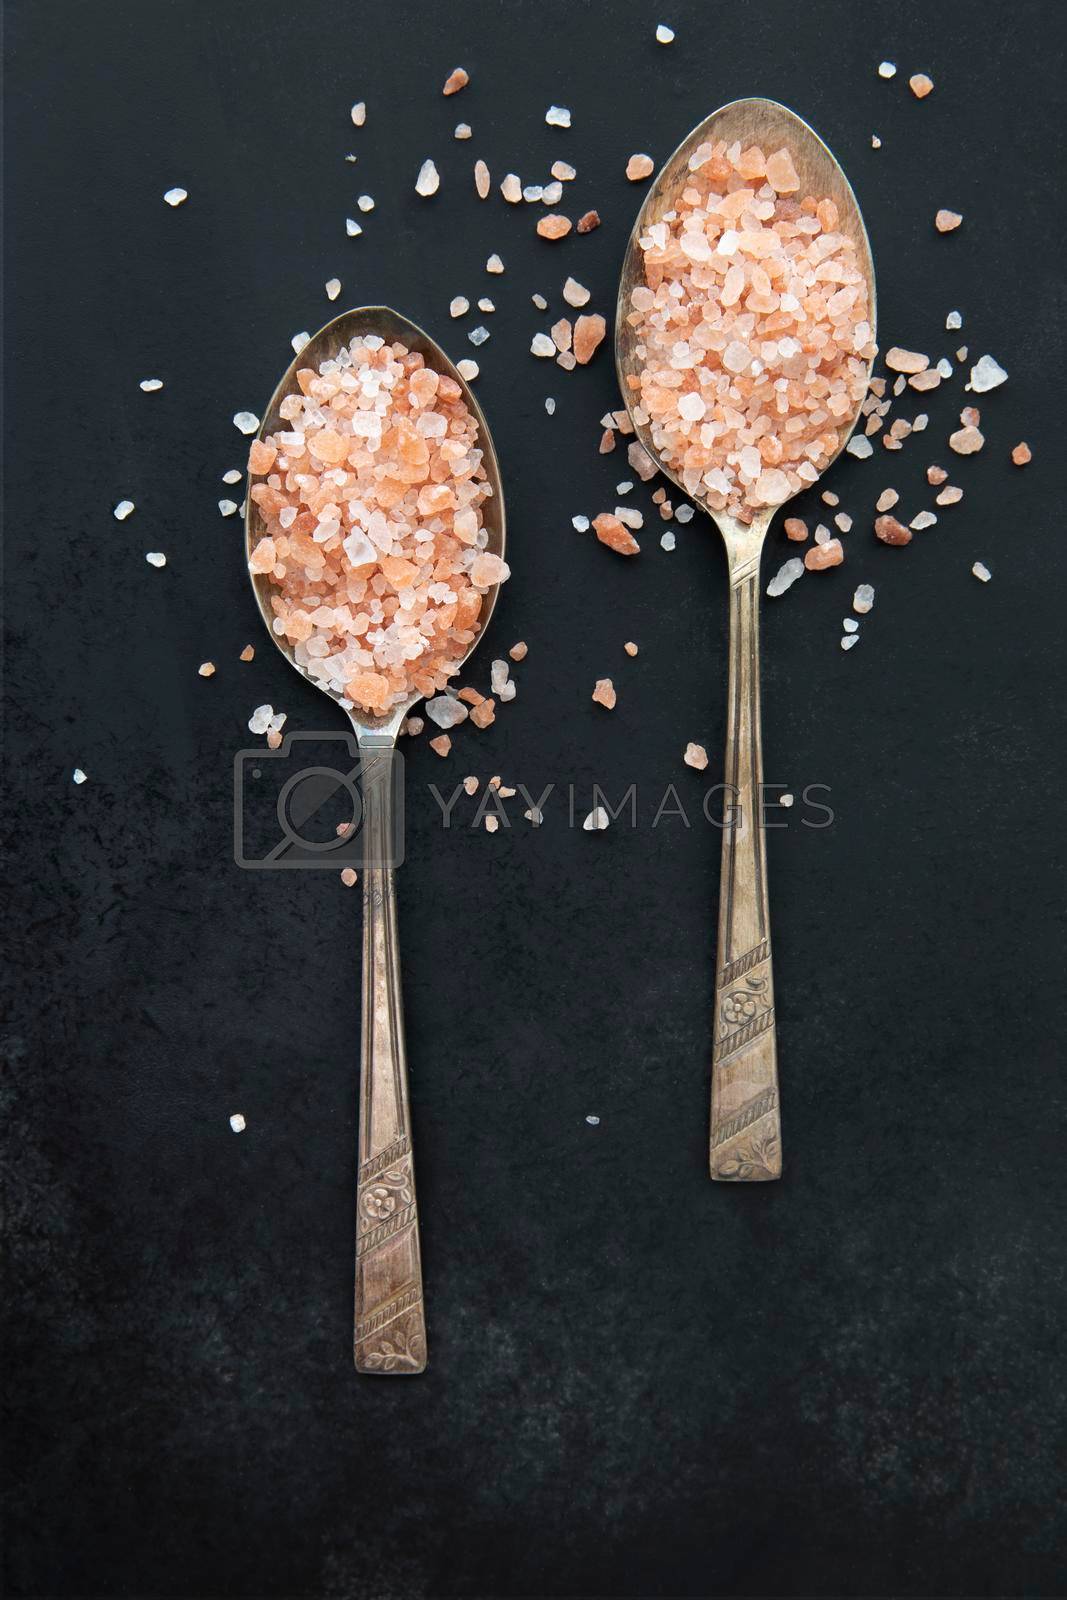 Royalty free image of Pink Salt in Spoons by charlotteLake